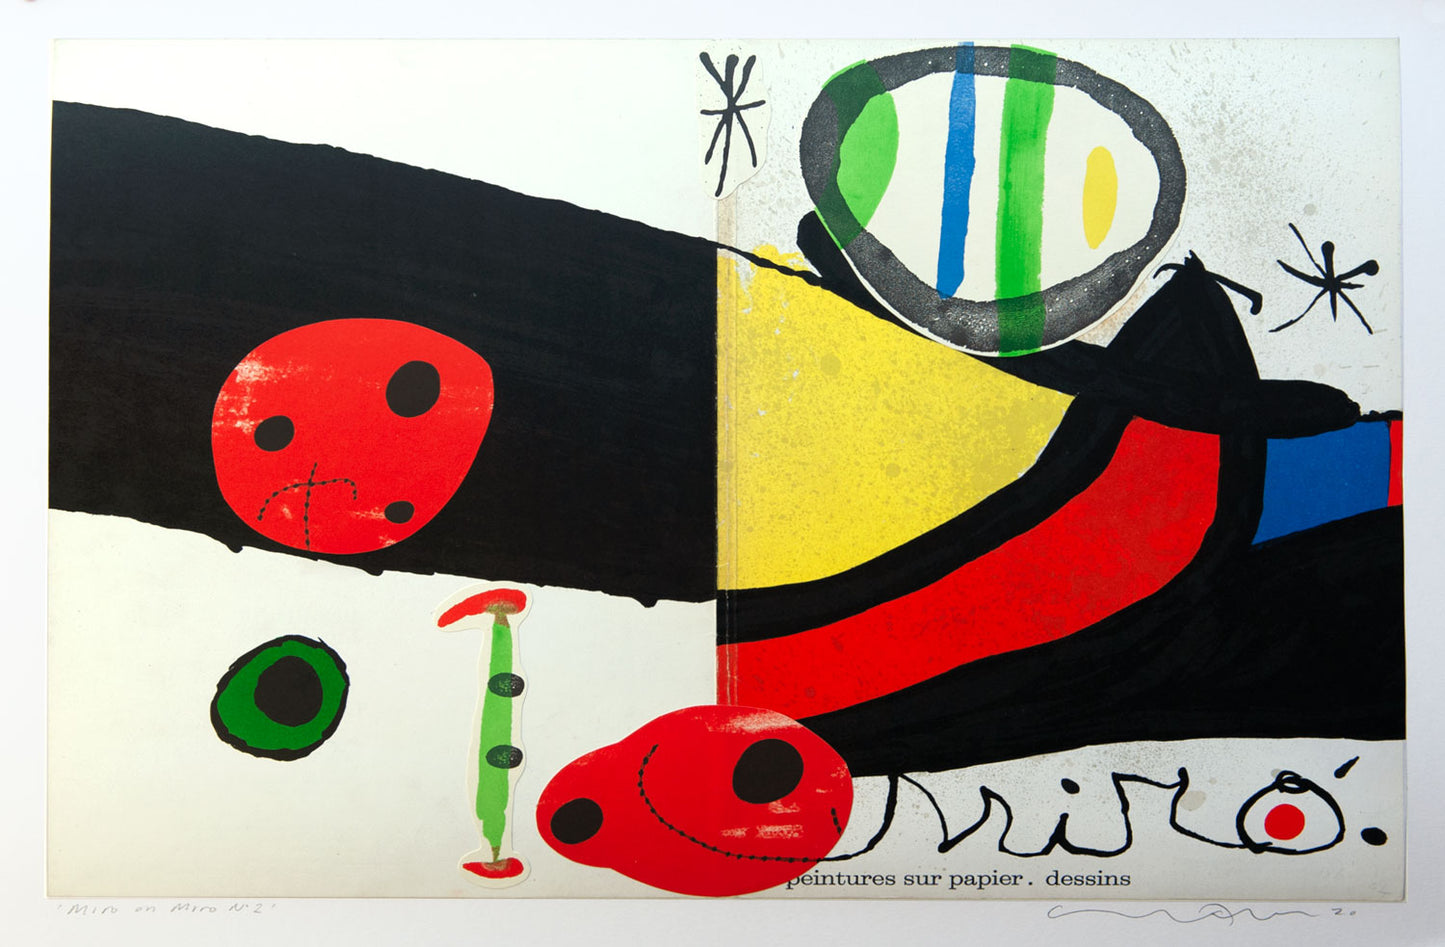 Miró on Miró No. 2